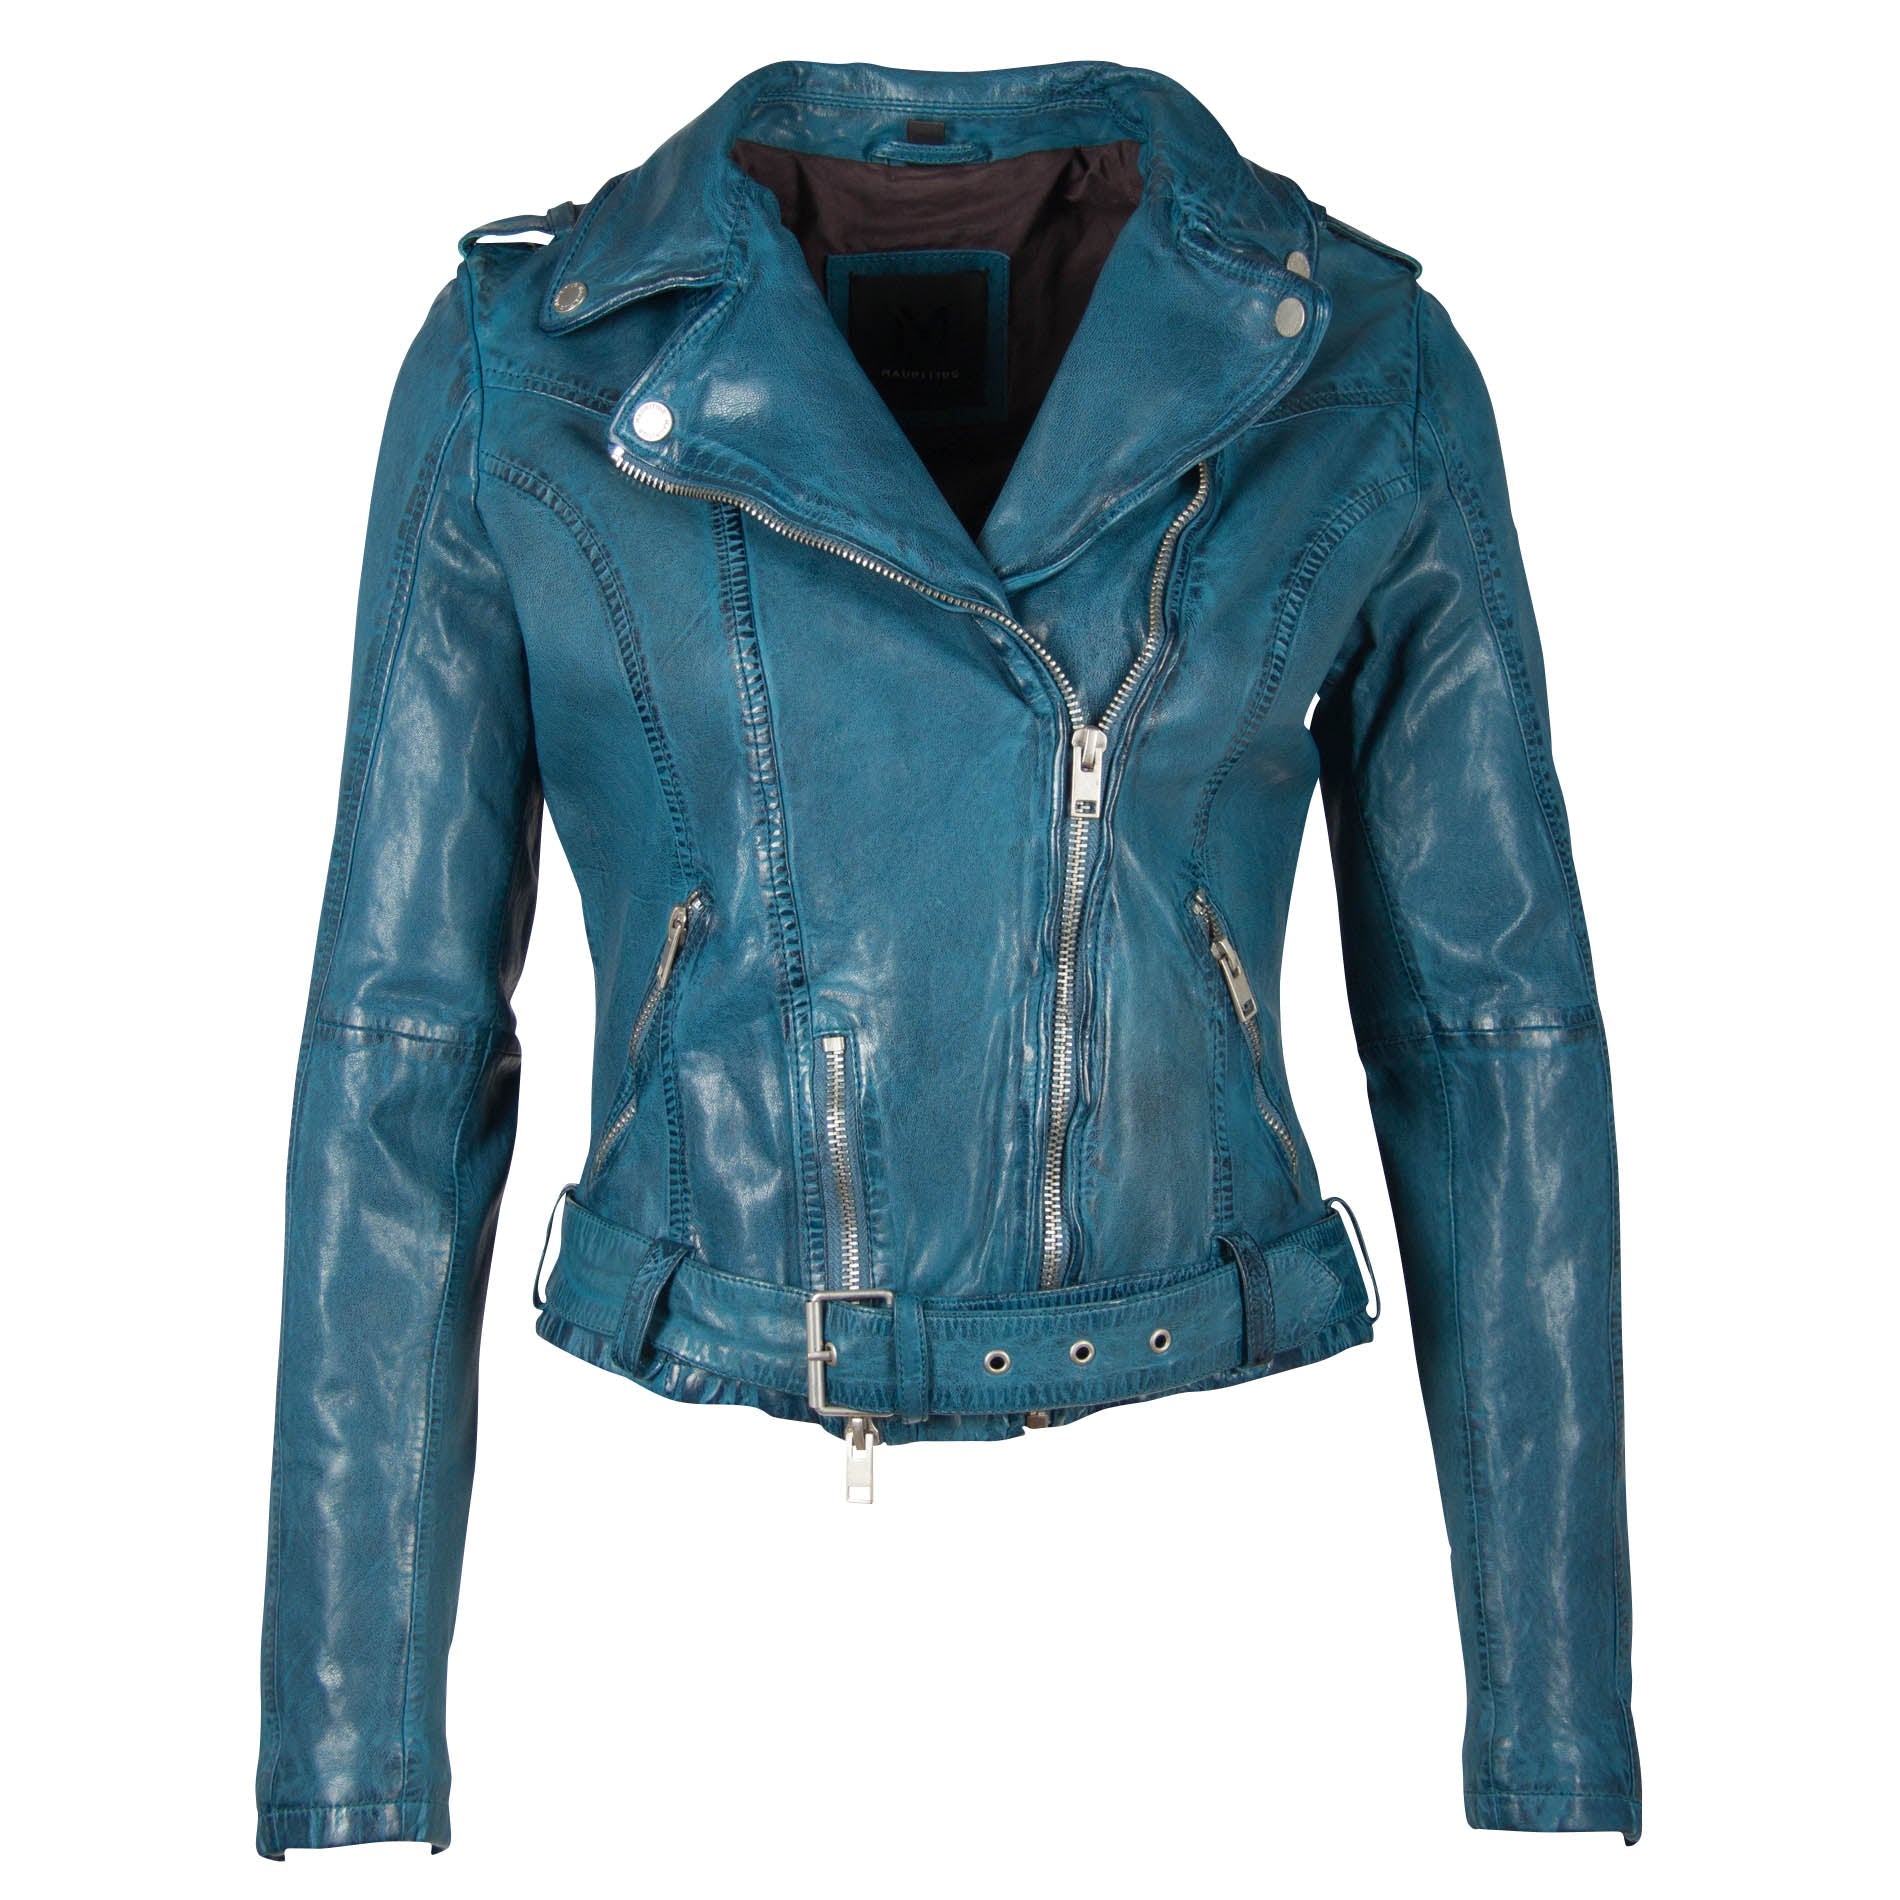 Mauritius Women's Blue Wild Rf Leather Jacket, Teal